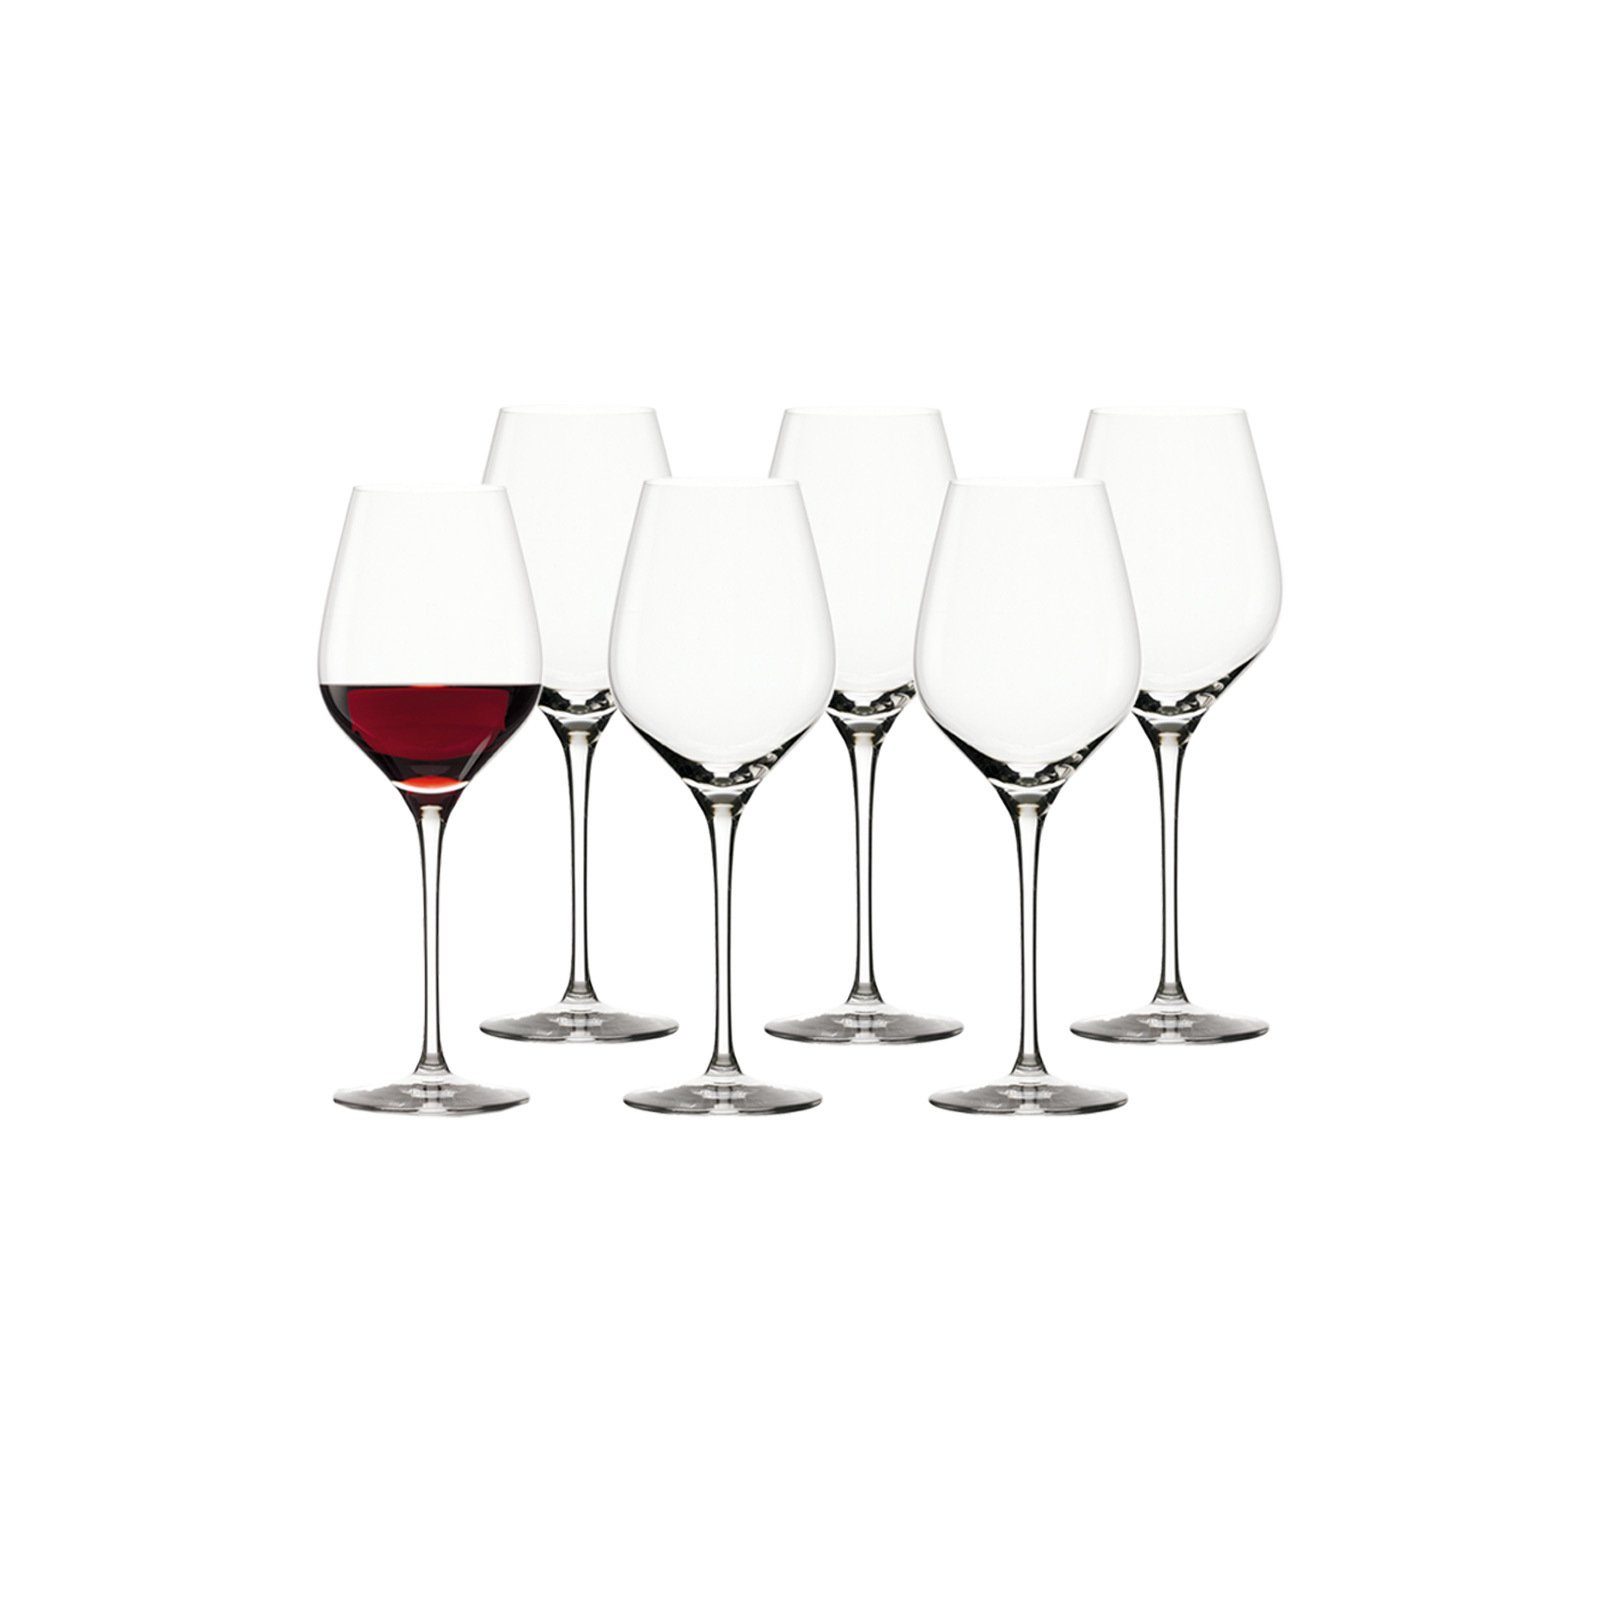 Royal Exquisit Tastinggläser Wein Glas Stölzle Glas Set, 18er